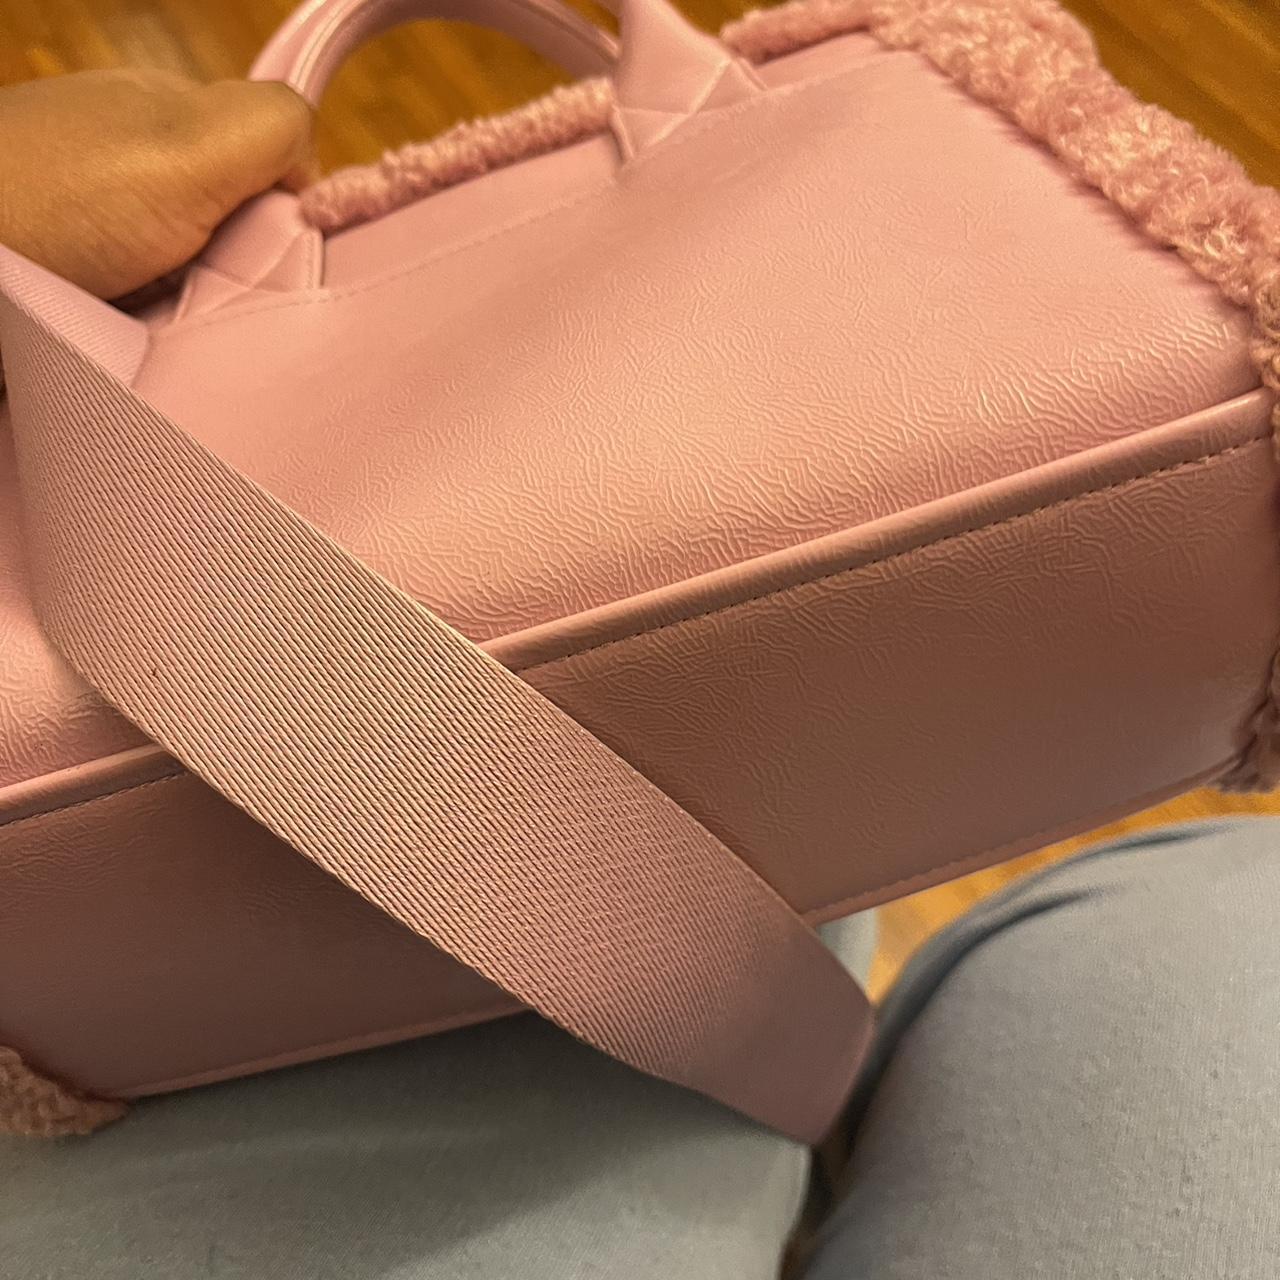 Kate spade pink fur tote bag with straps